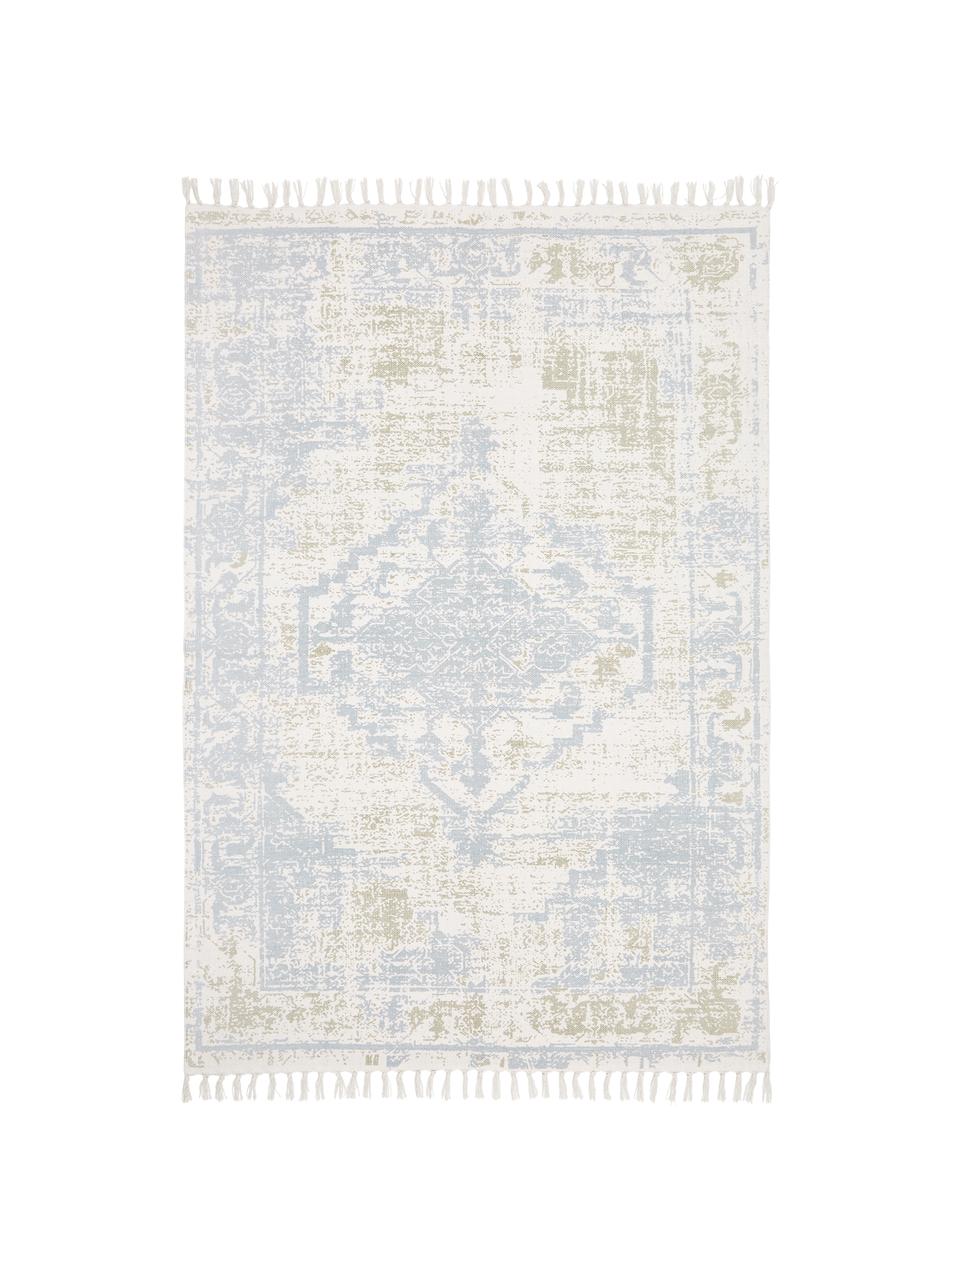 Tappeto vintage sottile in cotone beige/blu tessuto a mano Jasmine, Beige, blu, Larg. 70 x Lung. 140 cm (taglia XS)